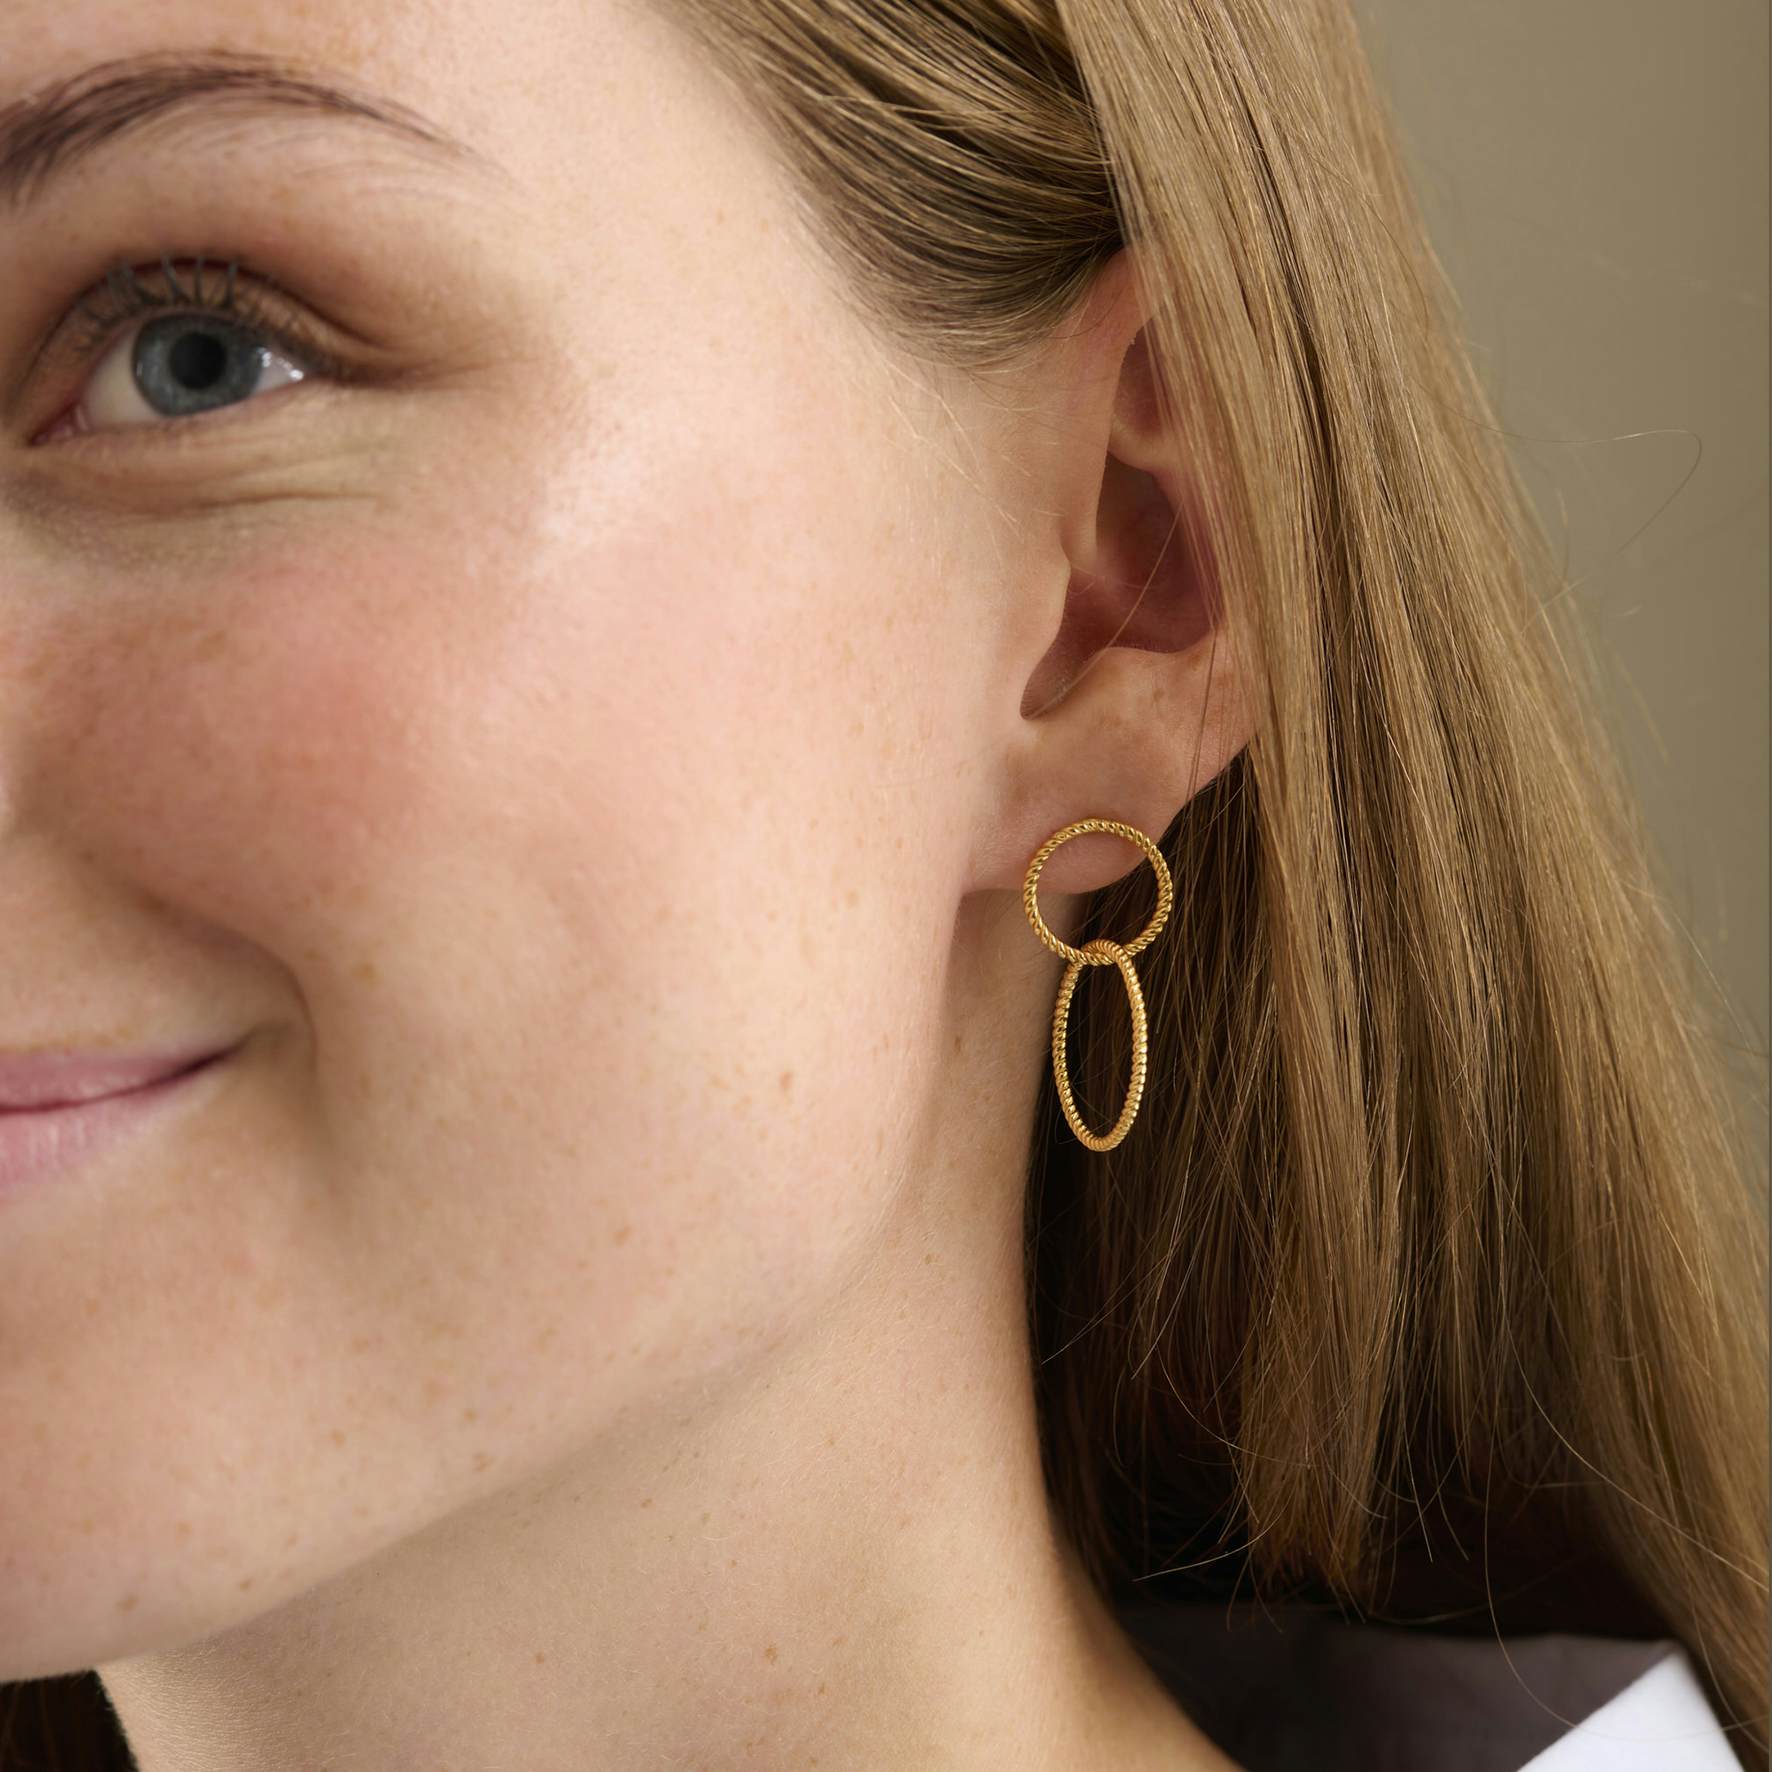 Double Twisted Earrings von Pernille Corydon in Vergoldet-Silber Sterling 925